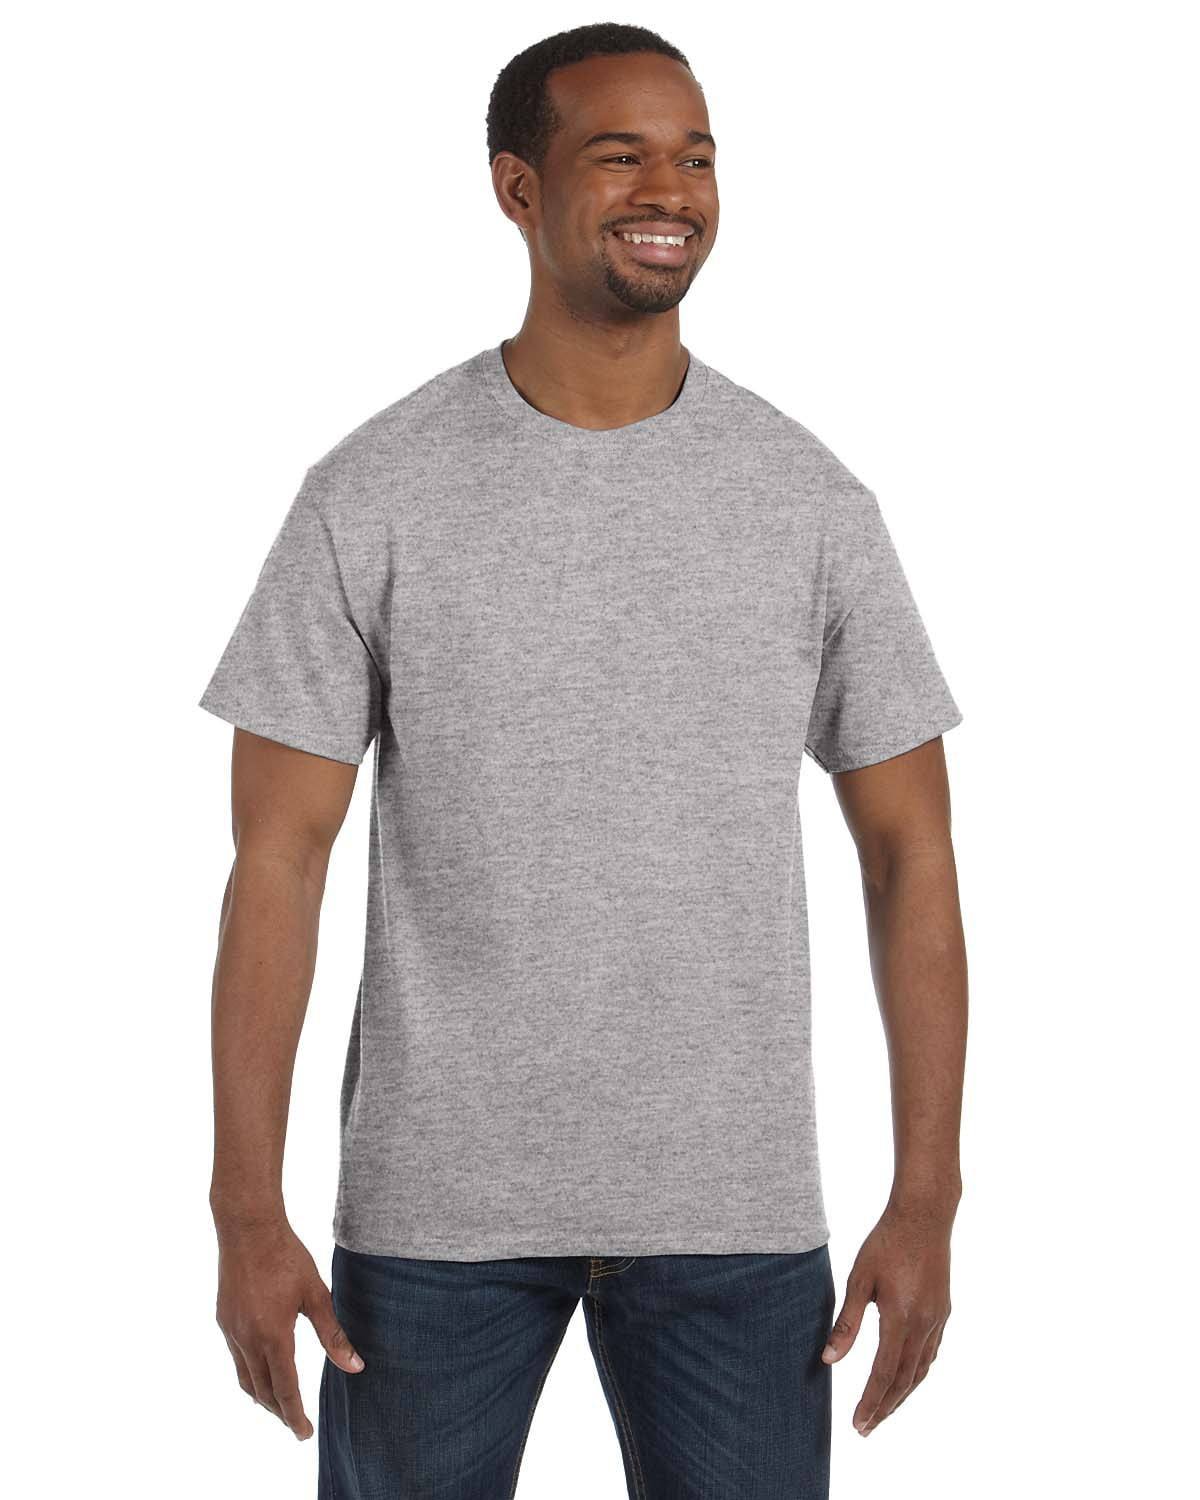 Details about   Hanes Mens Size XL Denim Blue ComfortSoft Tagless Pocket T-Shirts 3-pack NEW 